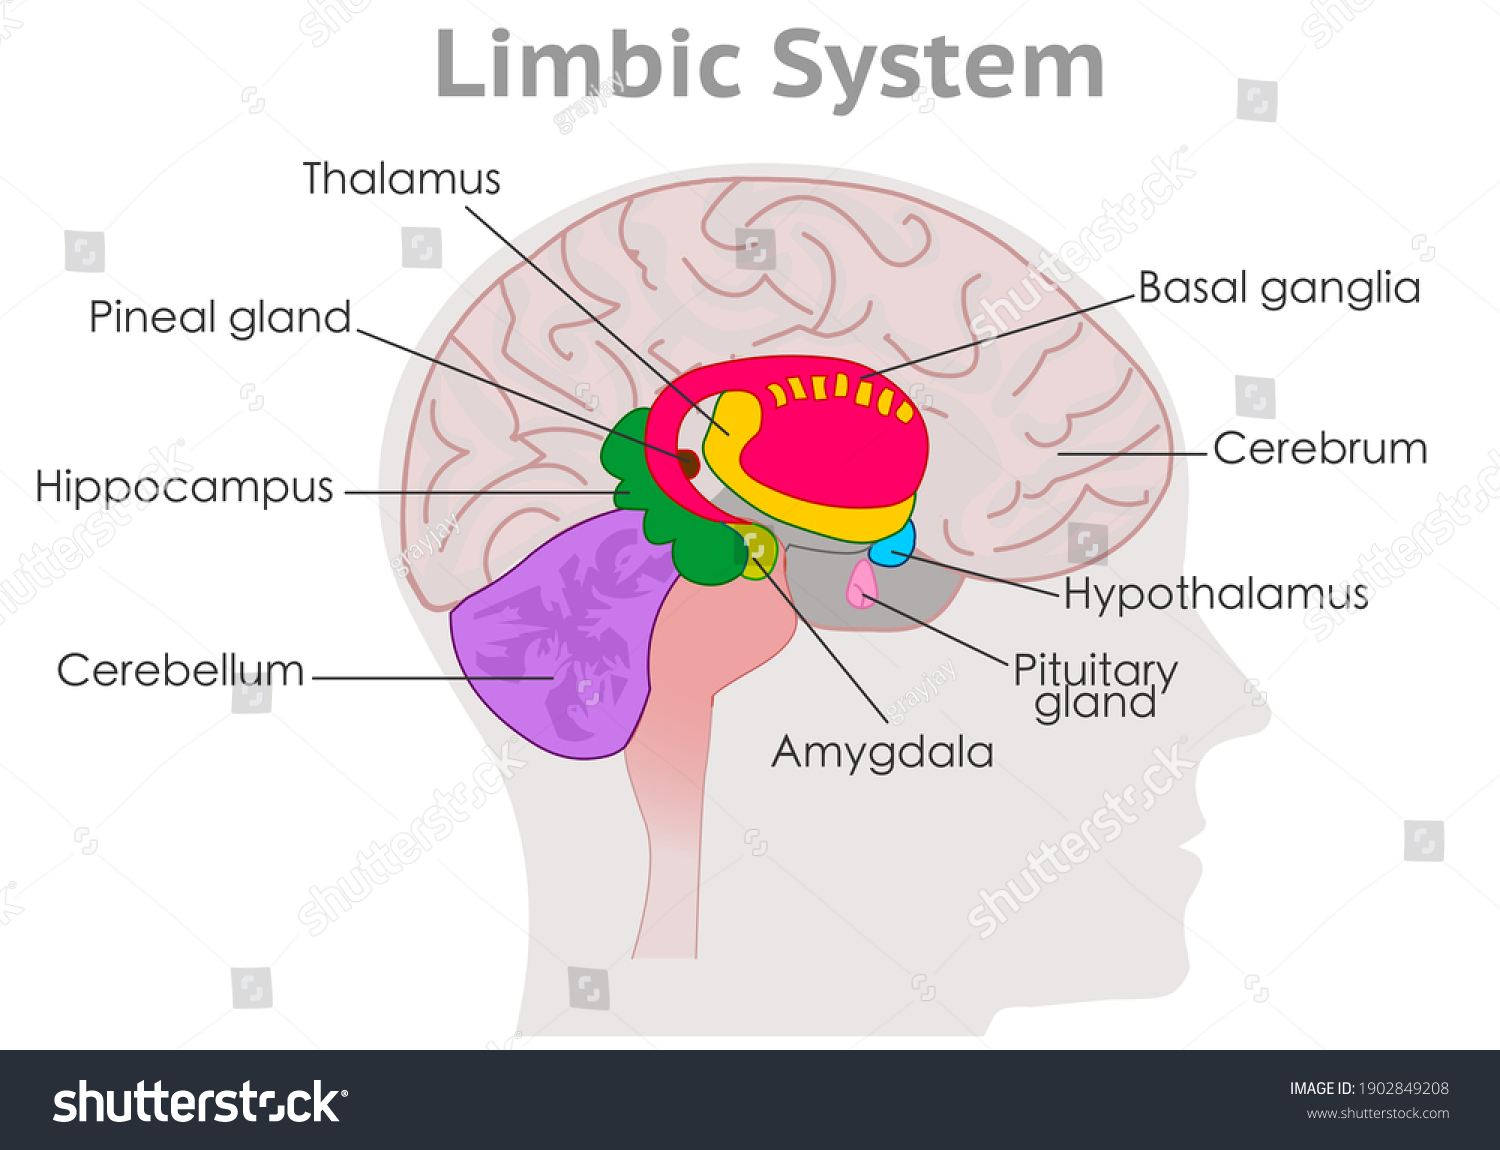 SVG of Limbic system parts anatomy. Human brain cross section. Explanations. Hypothalamus, thalamus, amygdala, basal ganglia. Draw MRI colored diagram structure. Gray head back. Medical illustration vector svg